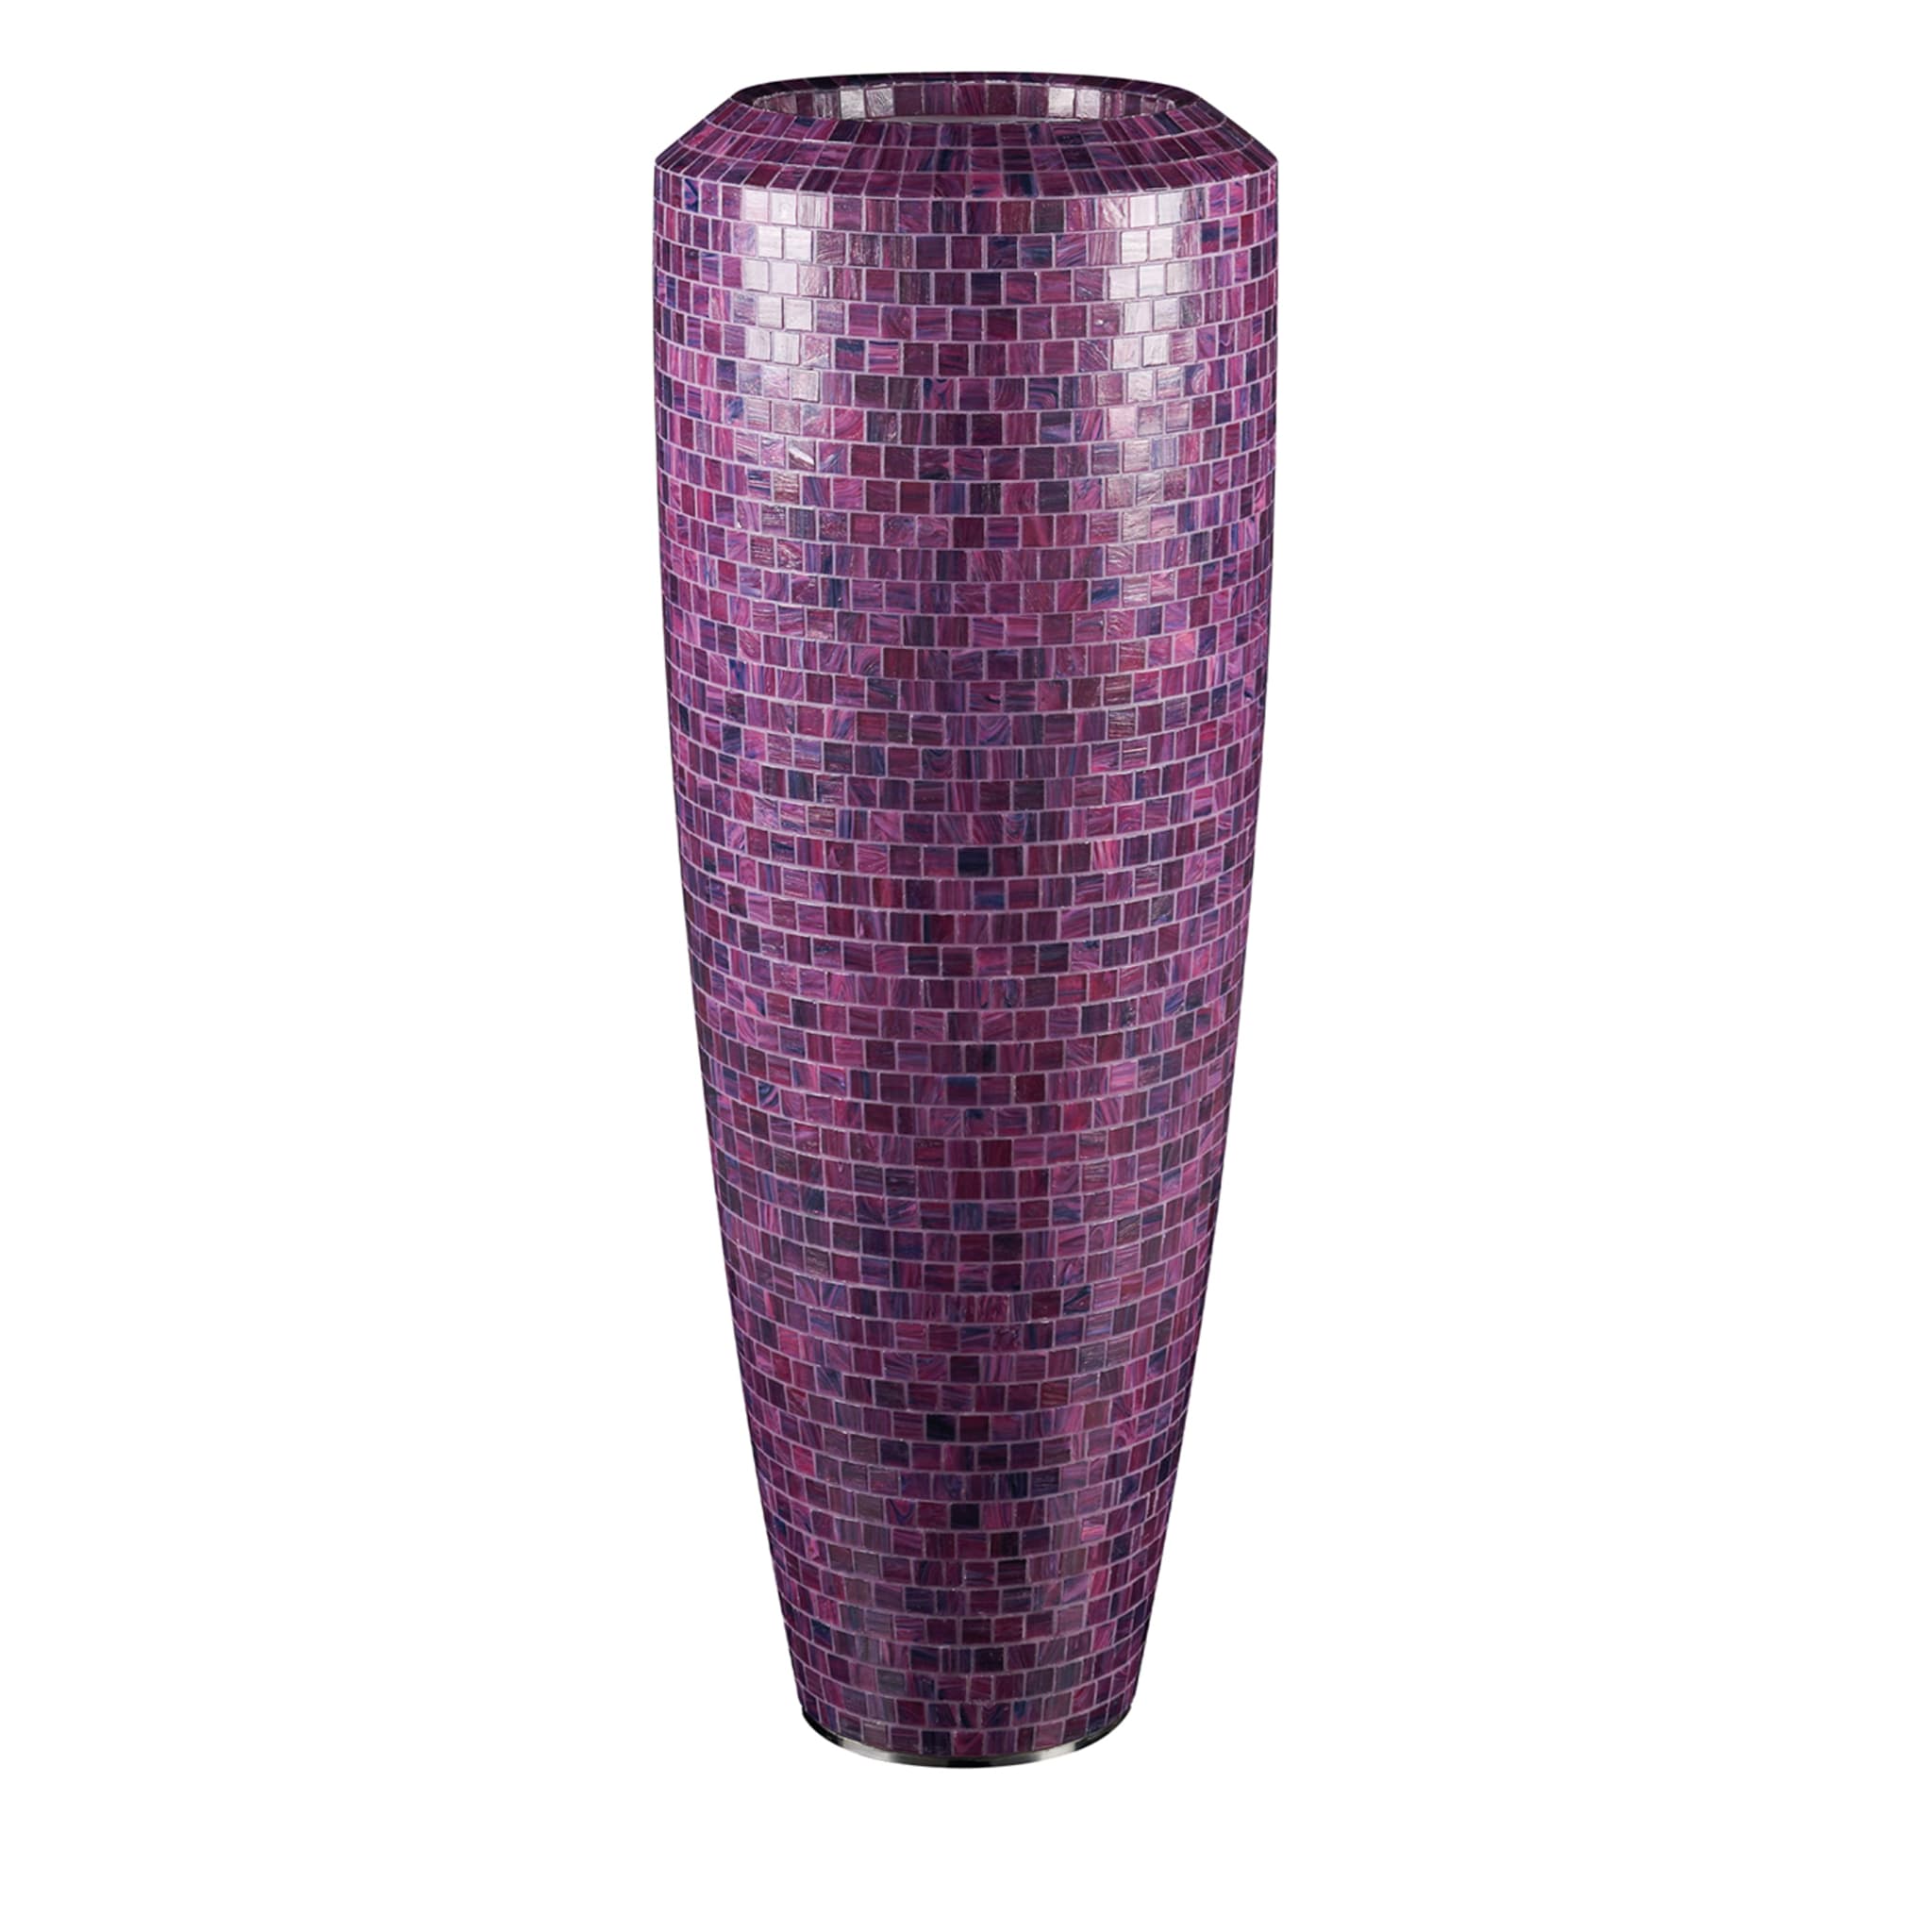 Obice Bisazza Mosaik lila dekorative Vase - Hauptansicht